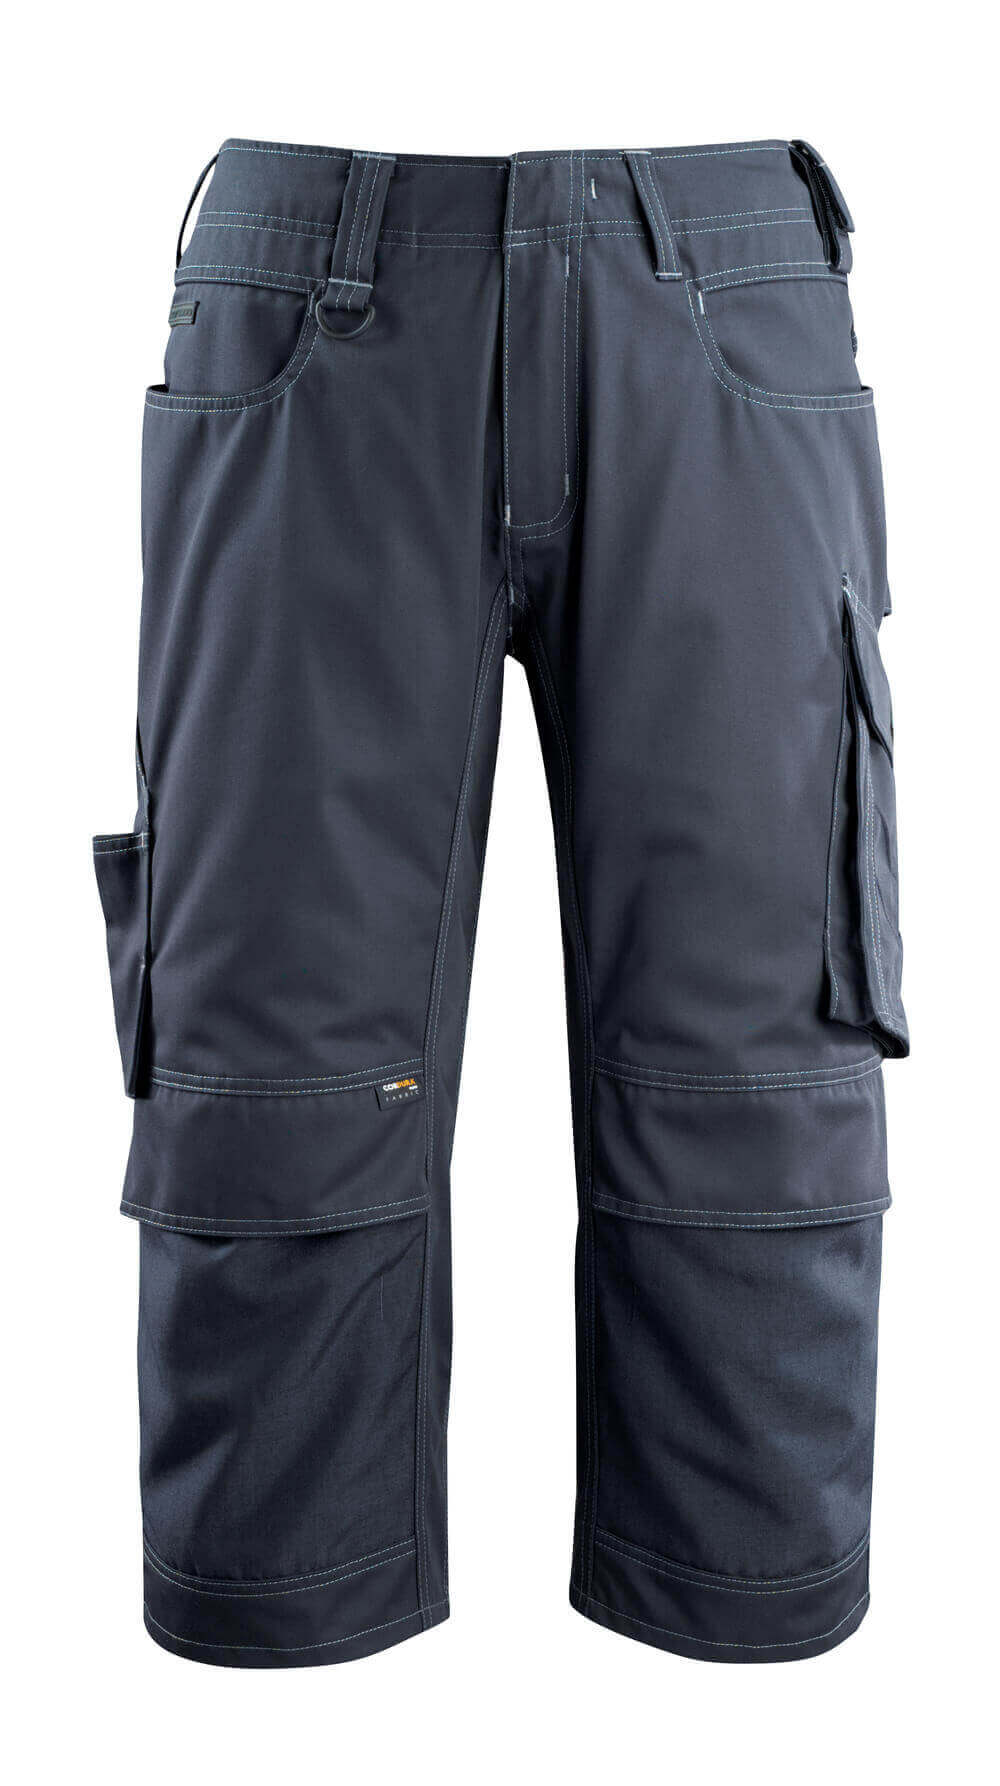 MASCOT®UNIQUE ¾ Length Trousers with kneepad pockets Altona 14249 - DaltonSafety